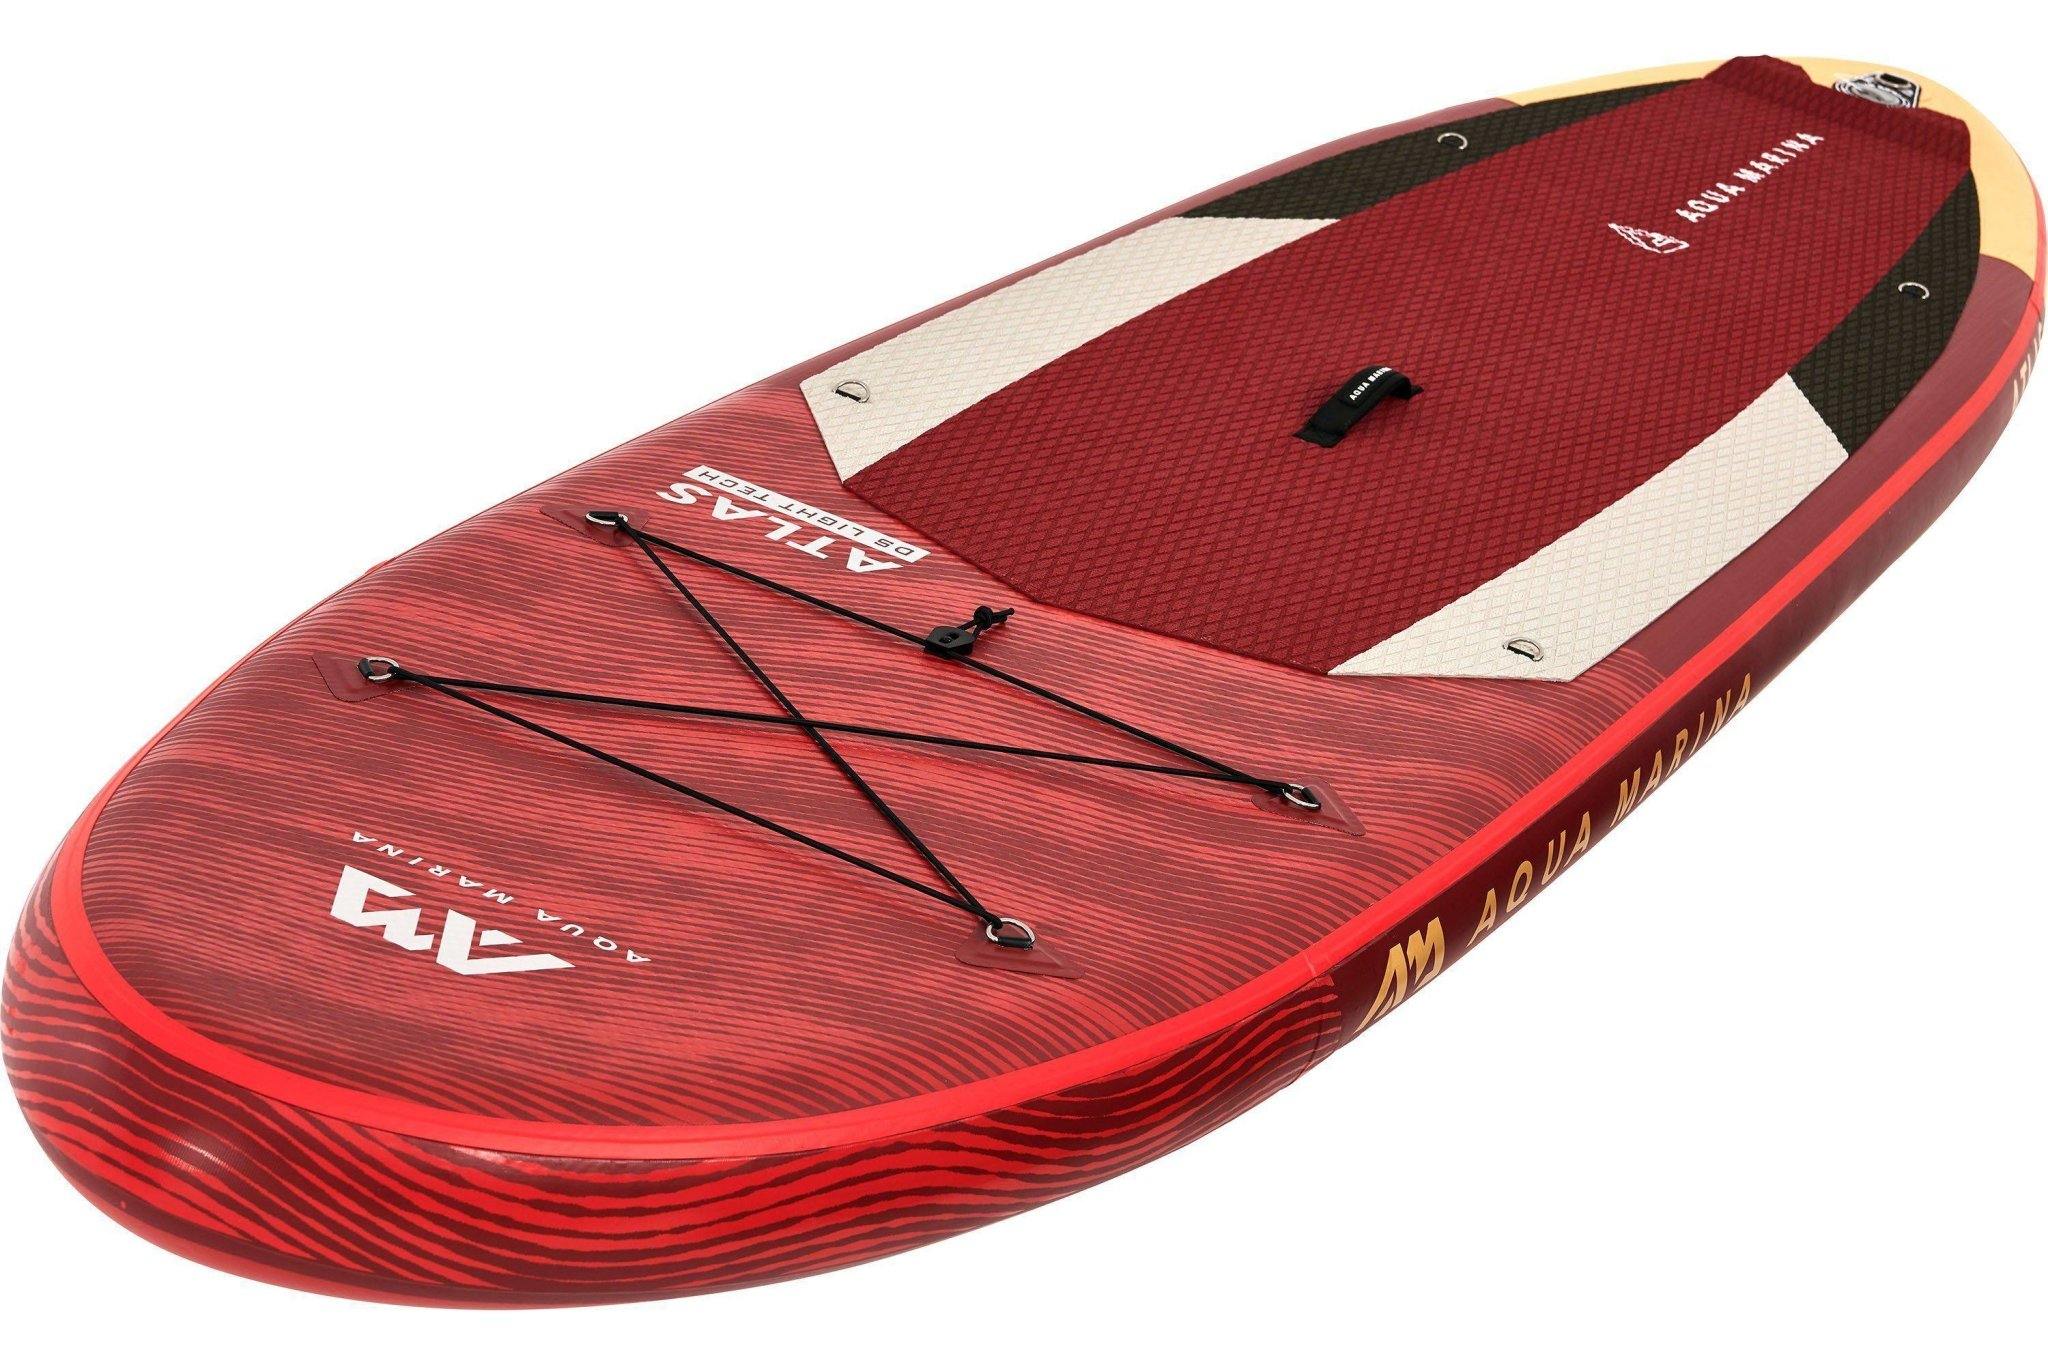 Atlas All-Around iSUP Paddle Board - DTI Direct USA